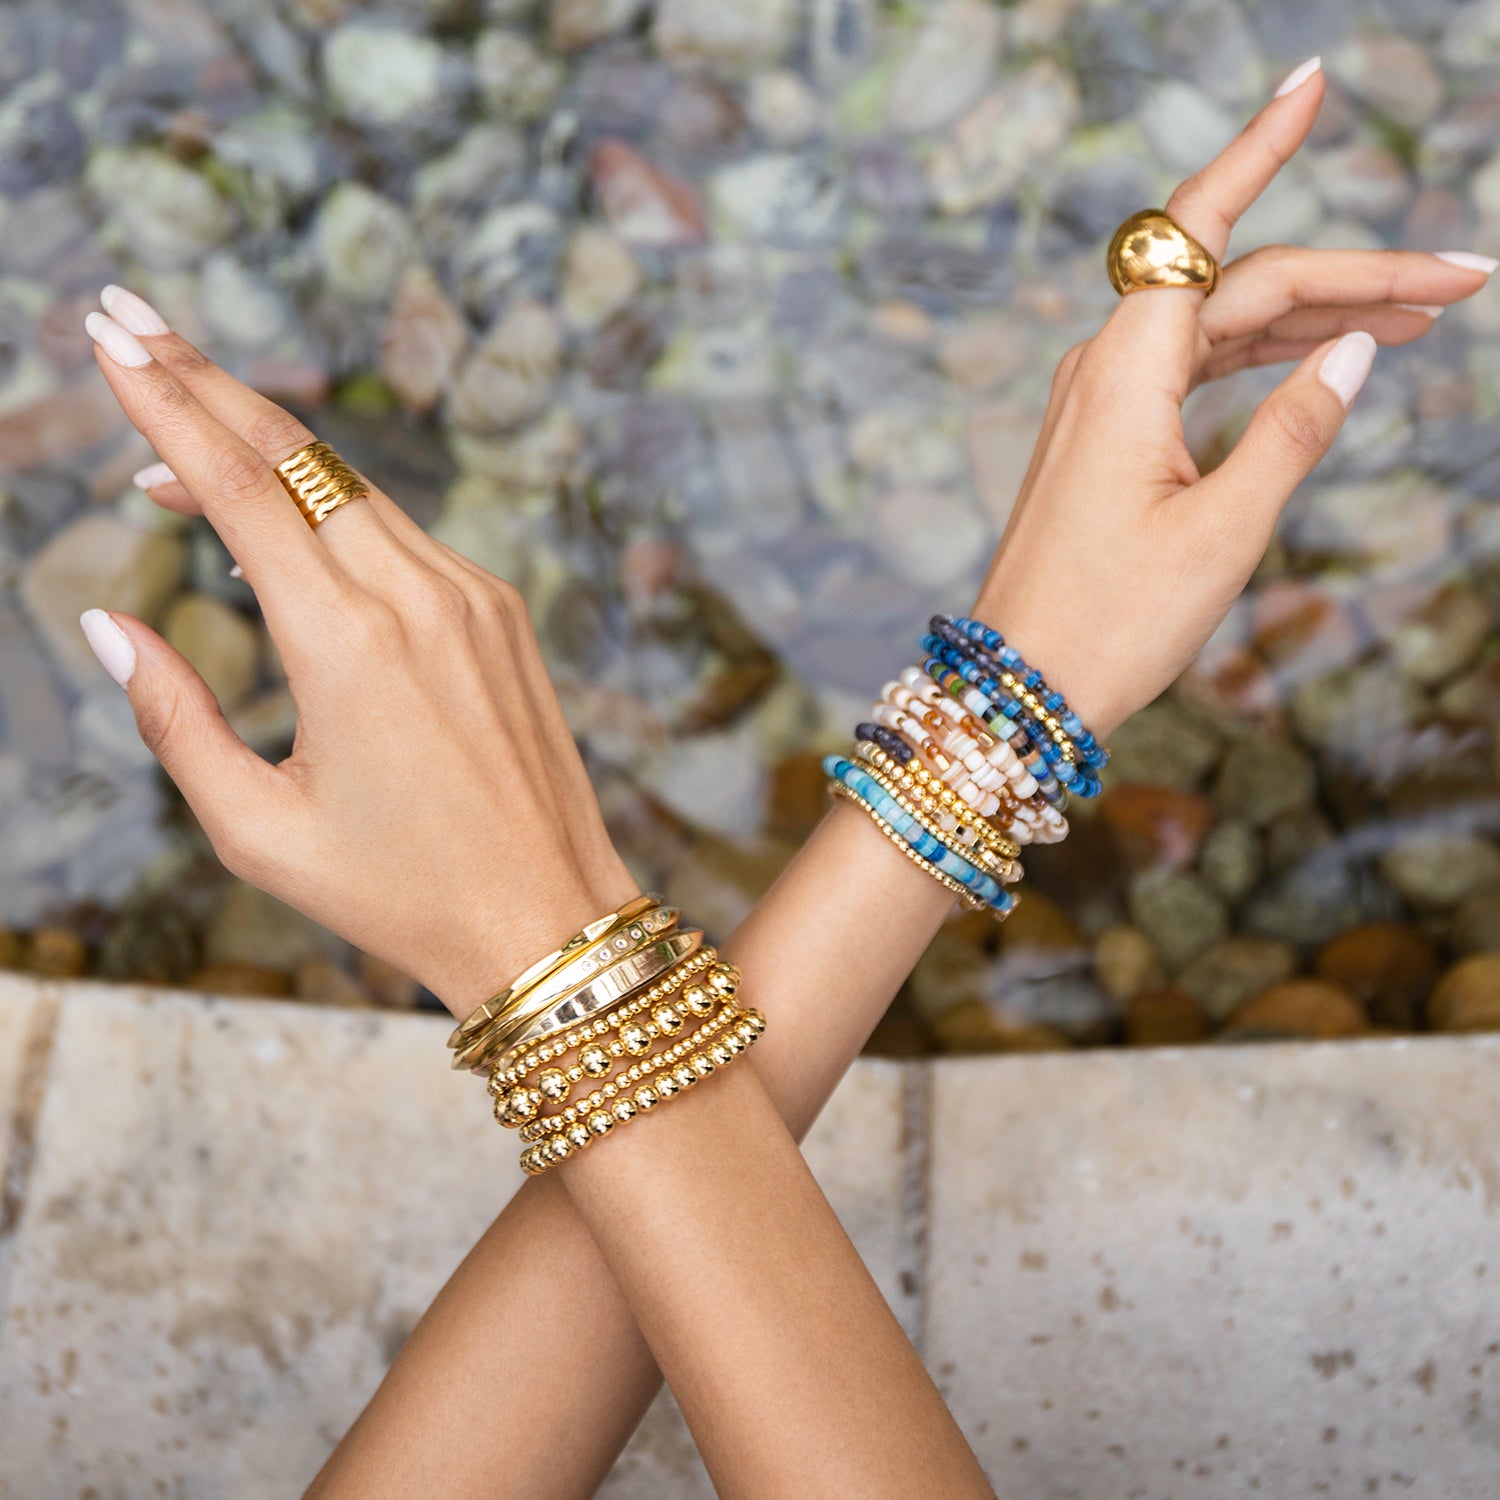 multi coin toggle bracelet – Marlyn Schiff, LLC